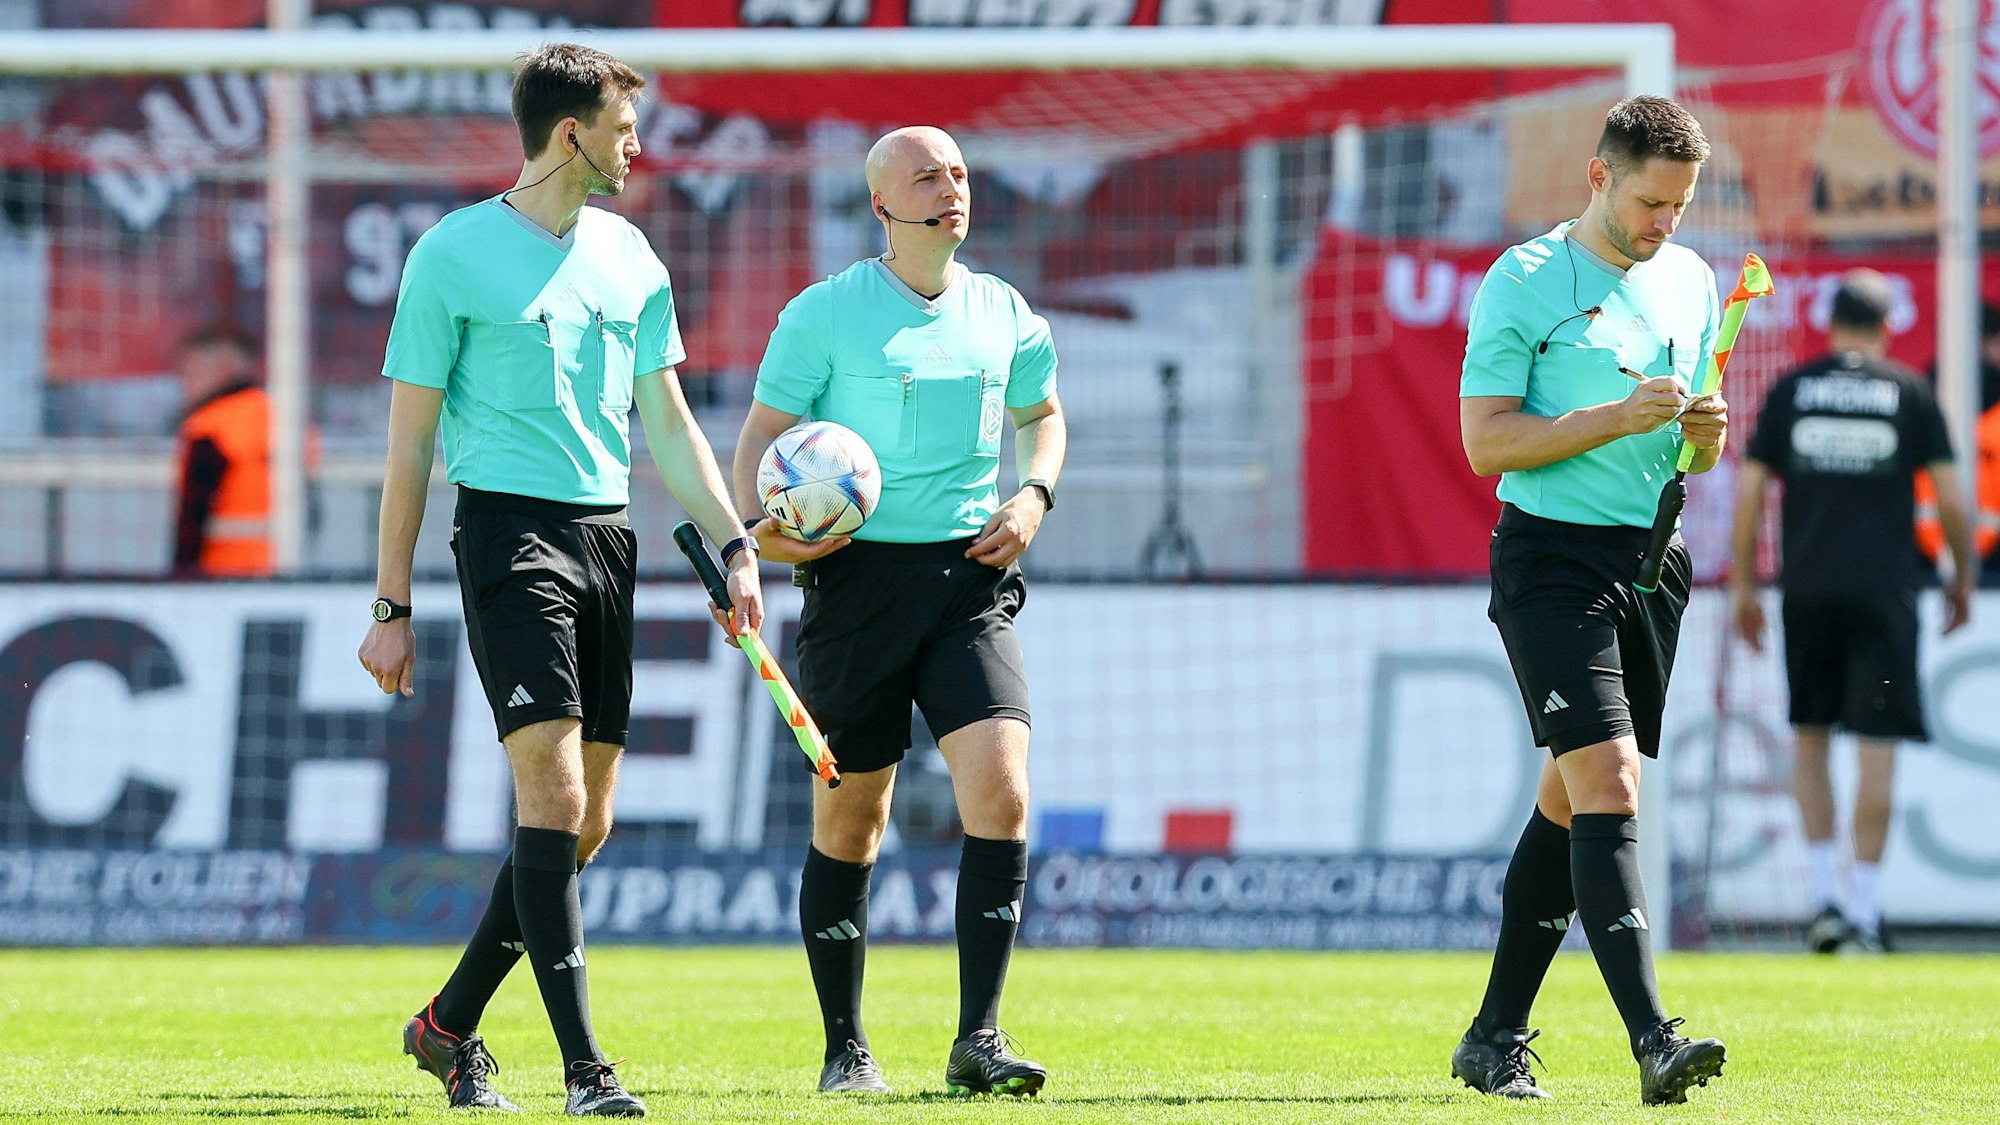 Schiedsrichter-Assistent Felix Grund, Schiedsrichter Nicolas Winter und Schiedsrichter-Assistent Fabian Porsch stehen auf dem Feld.